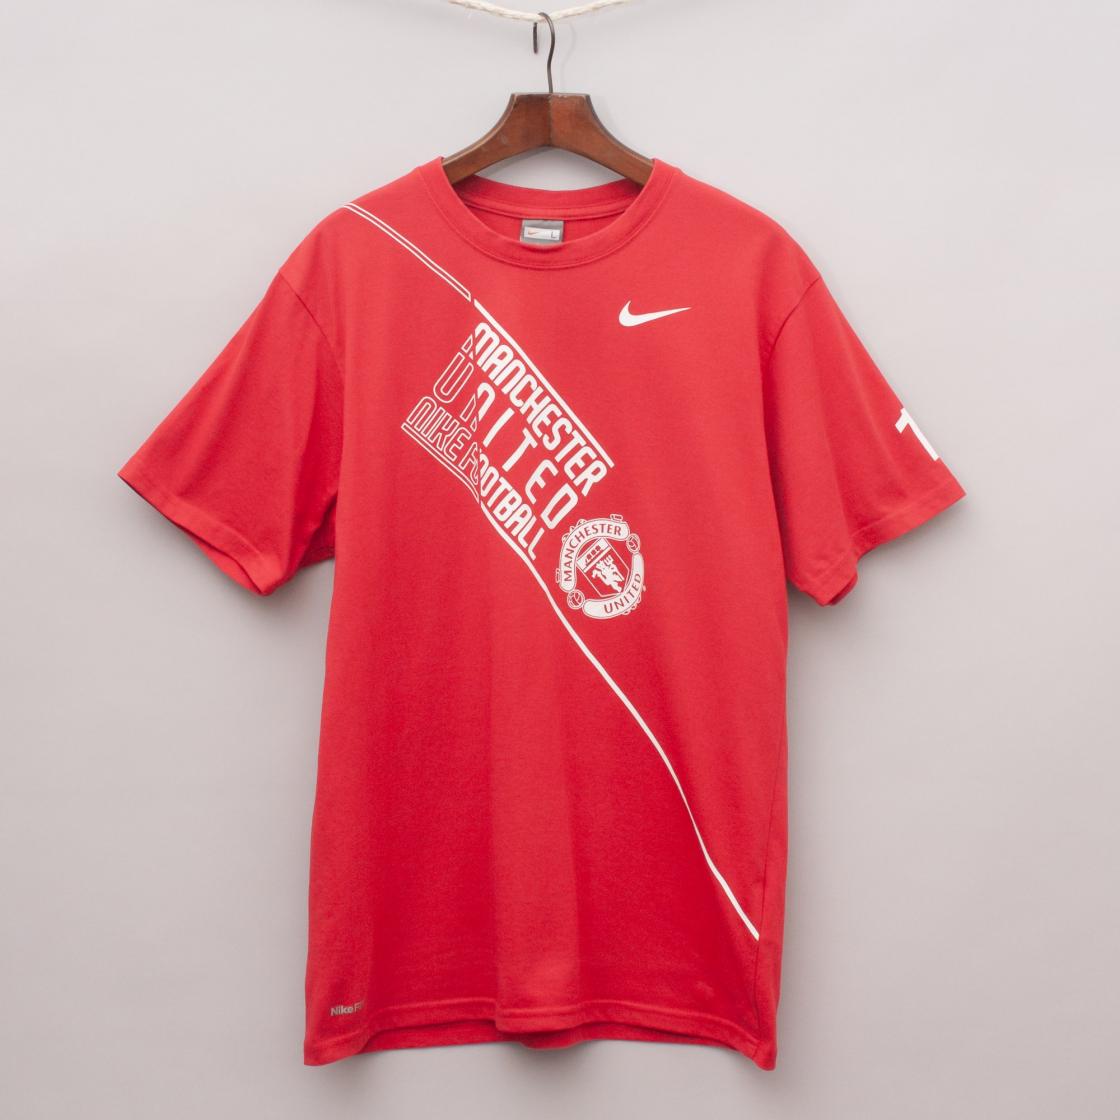 Nike Football T-Shirt (Reduced - WAS $20)